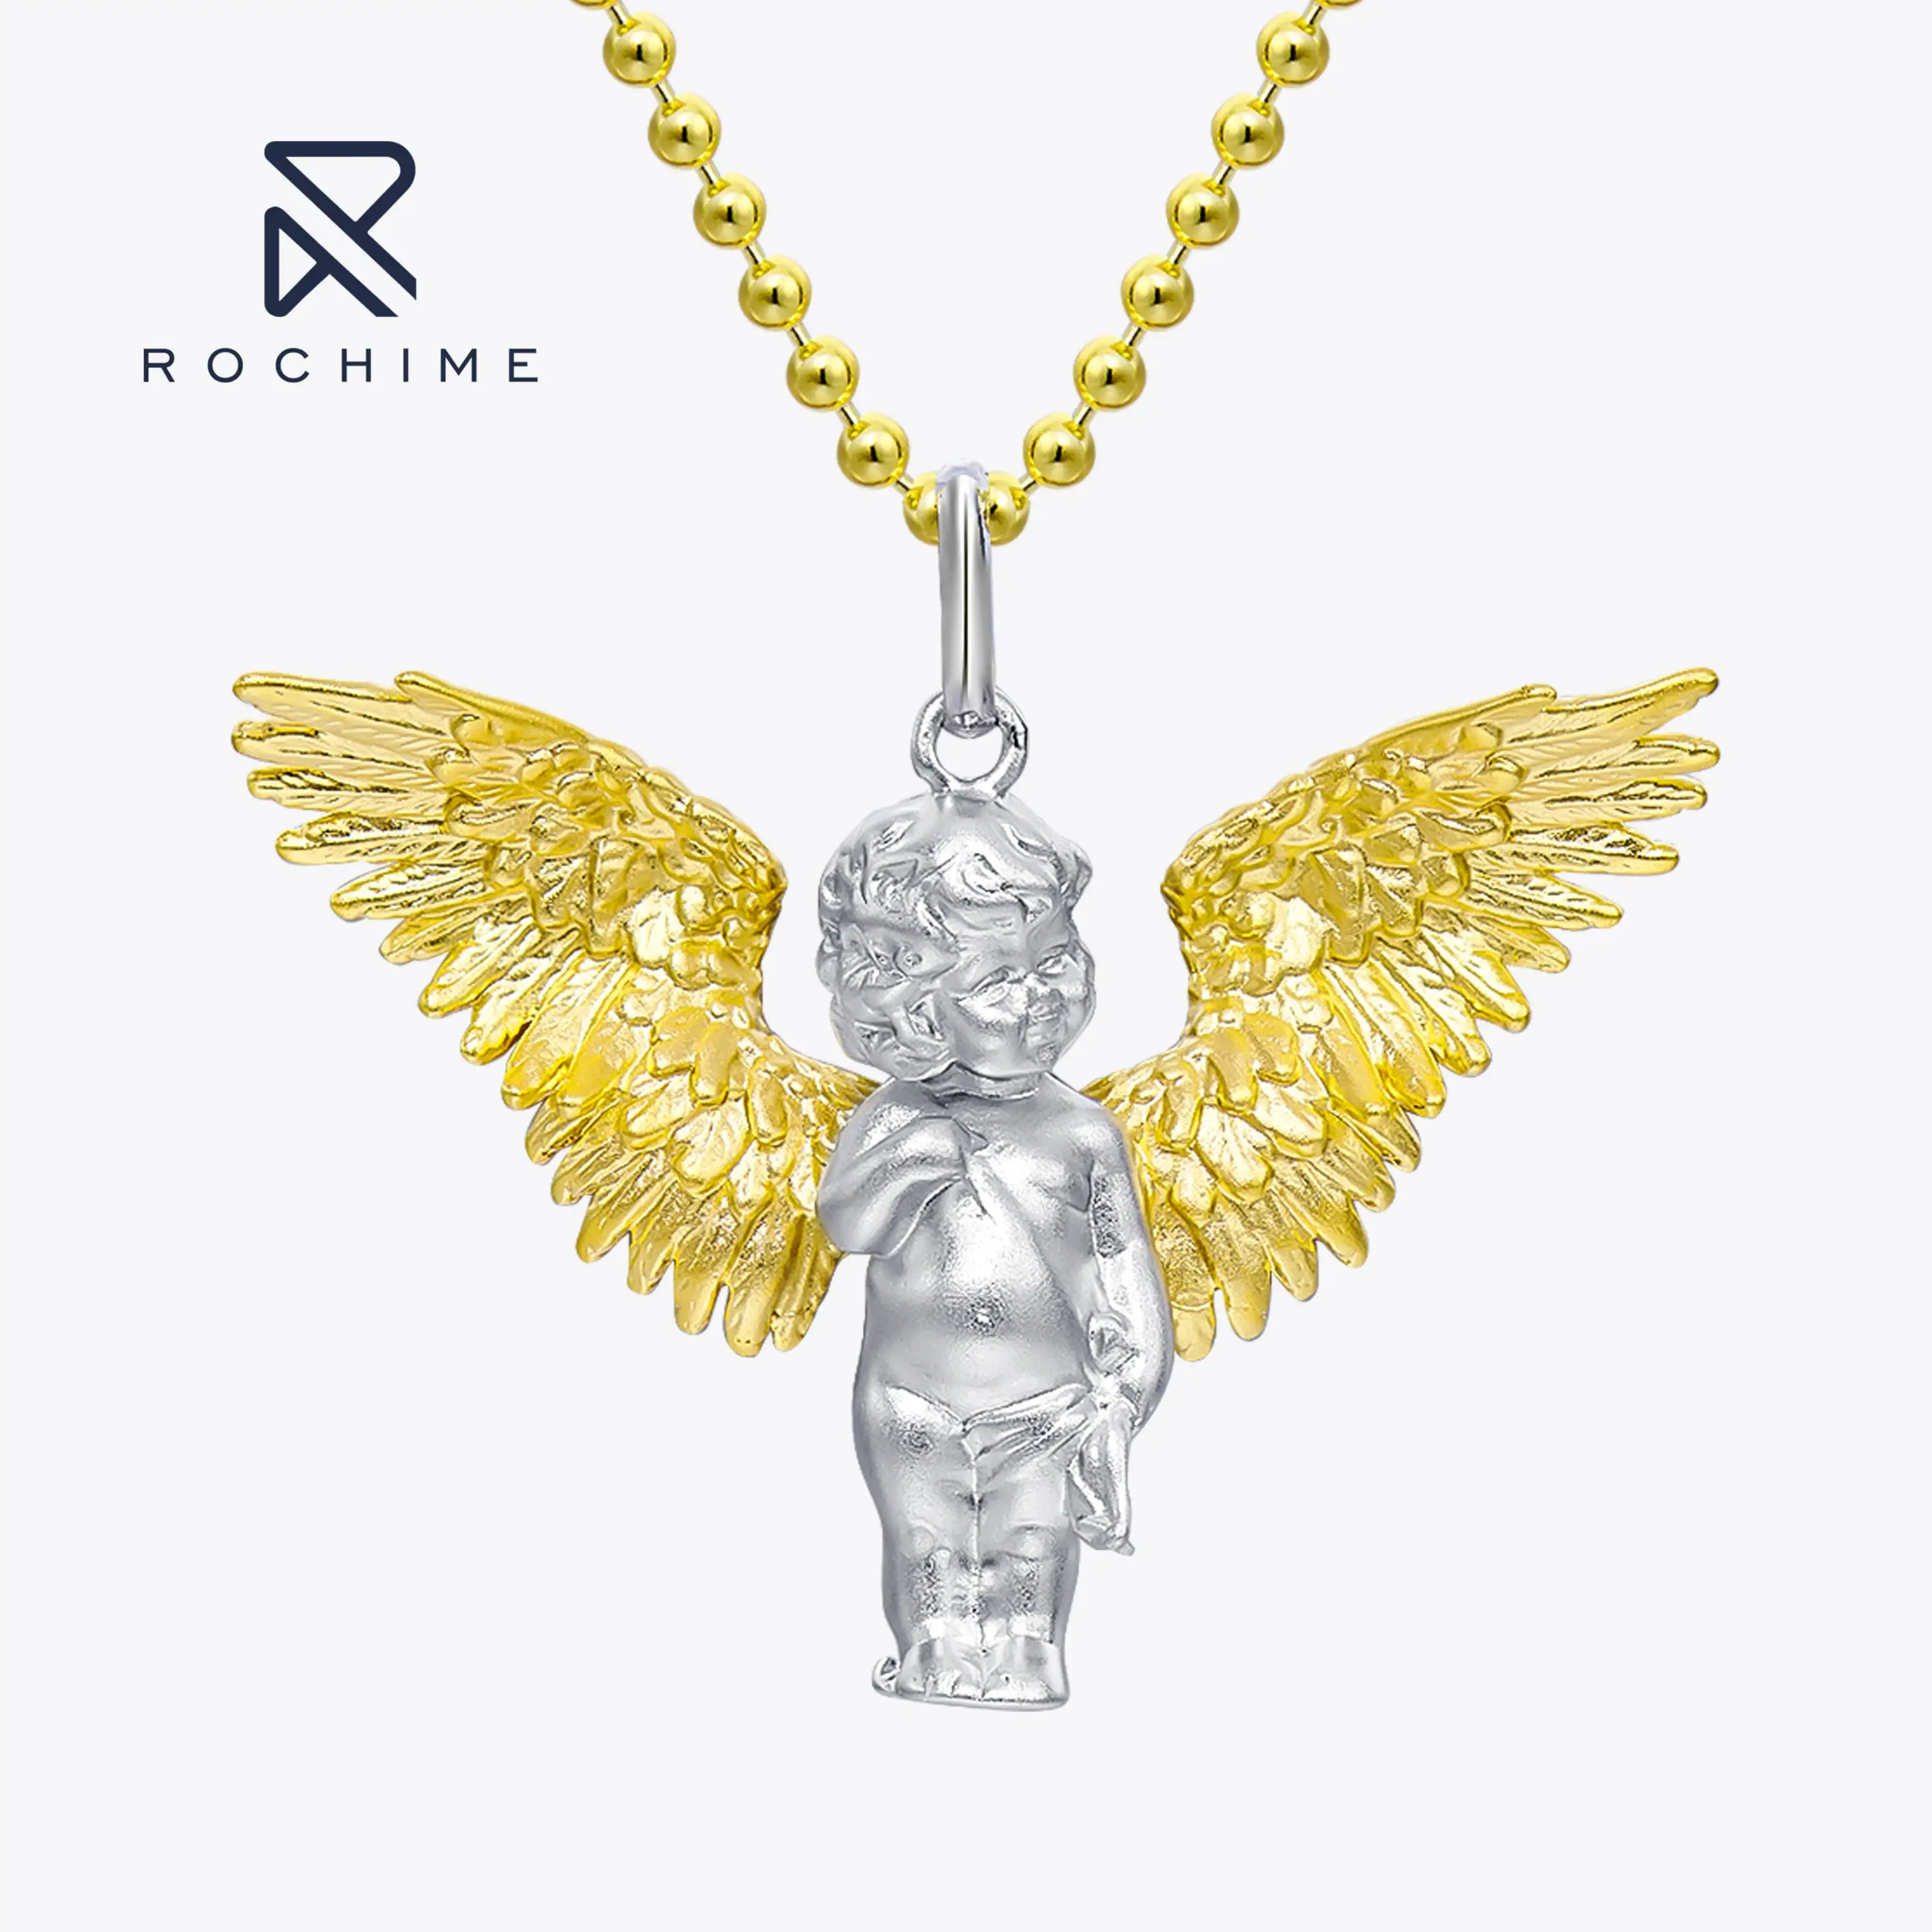 Rochime trendy jewelry religious angel pendant necklace 925 sterling silver chain zircon jewelry